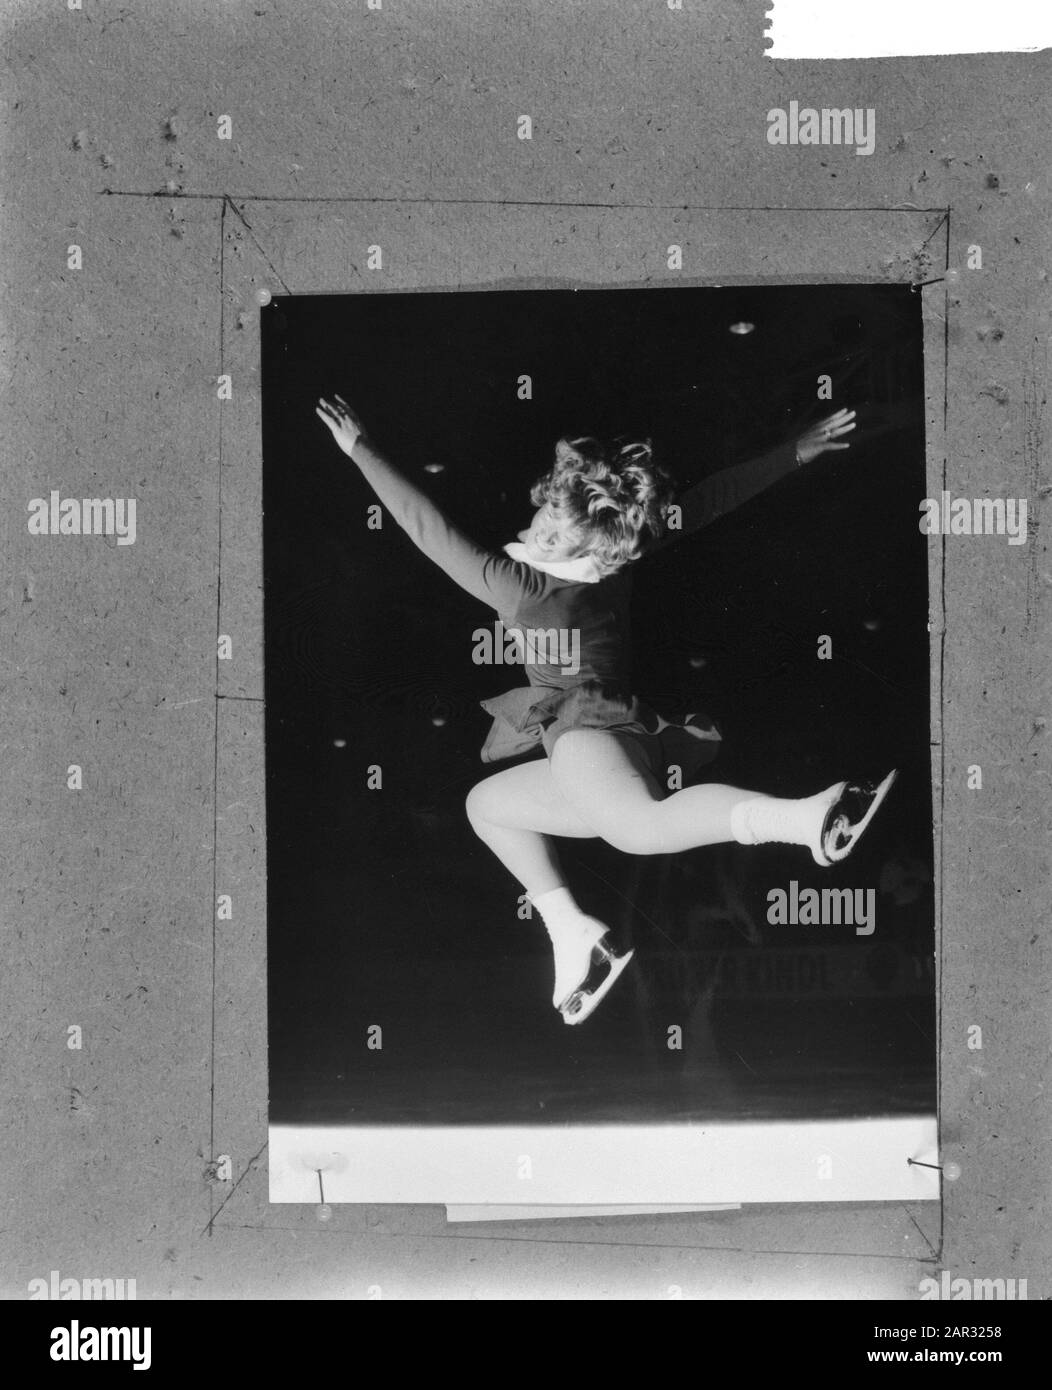 Winter Olympics 1964, Sjoukje Dijkstra in action jump Date: February 5, 1964 Location: Innsbruck, Oosternijk Keywords: art fighting, sport Person name: Dijkstra, Sjoukje Institution name: Winter Olympic Games Stock Photo